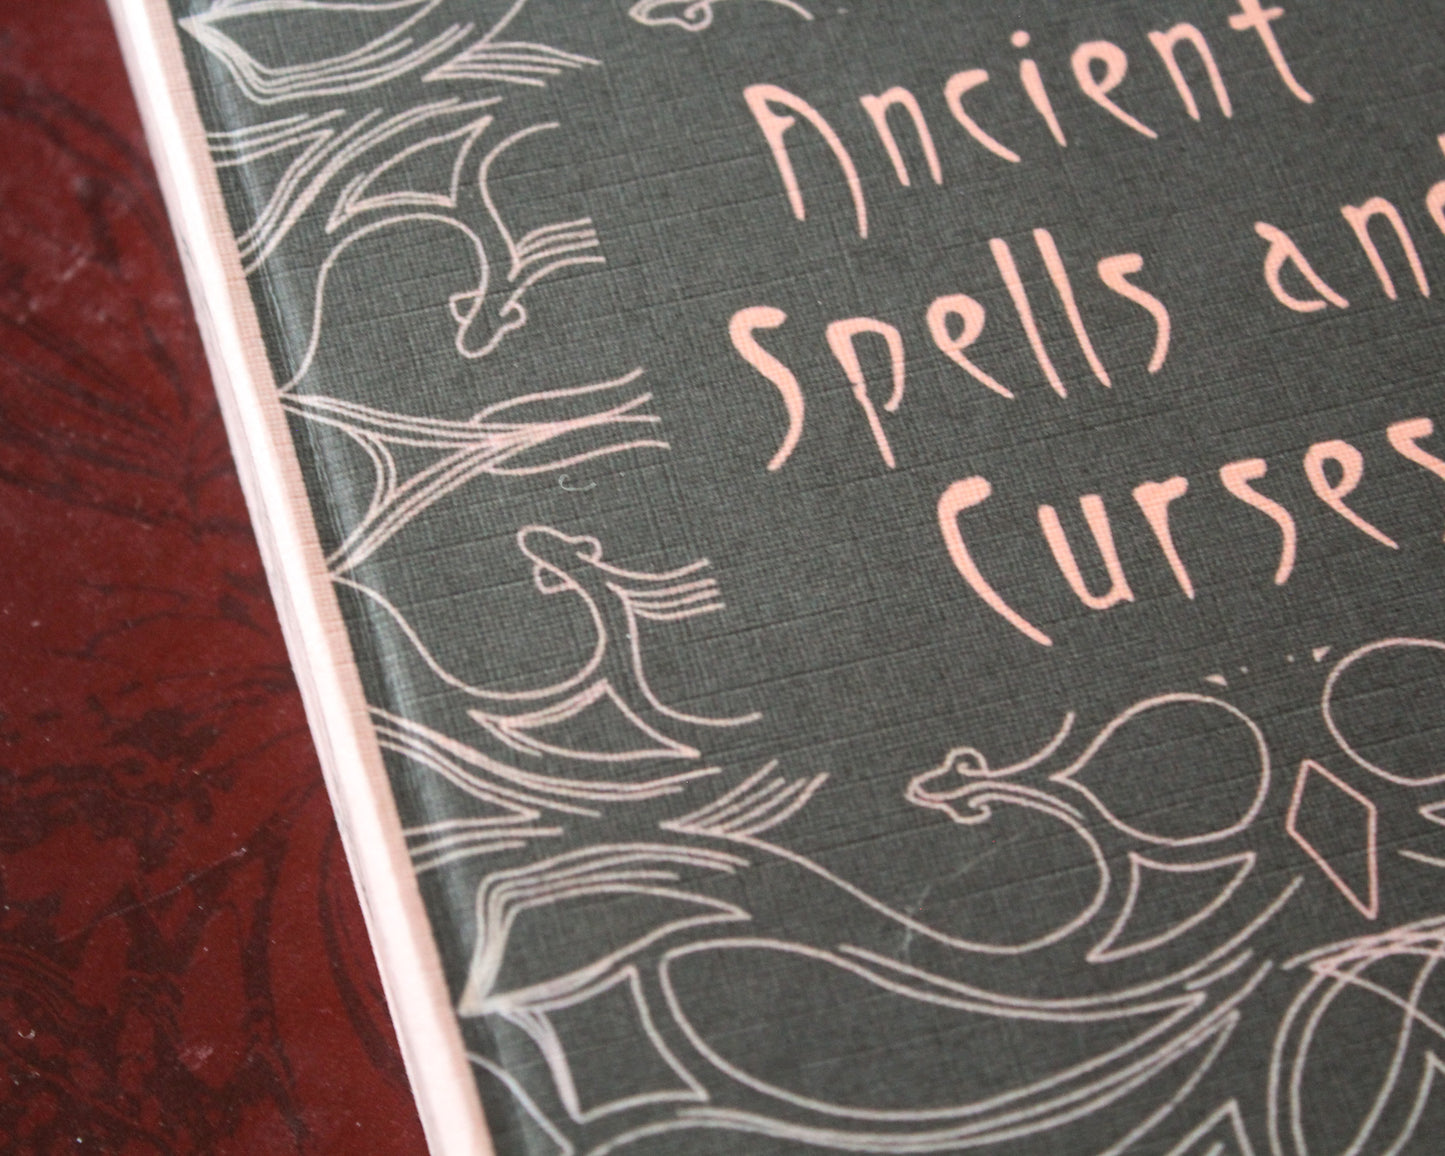 Ancient Spells and Curses, Hardback Notebook